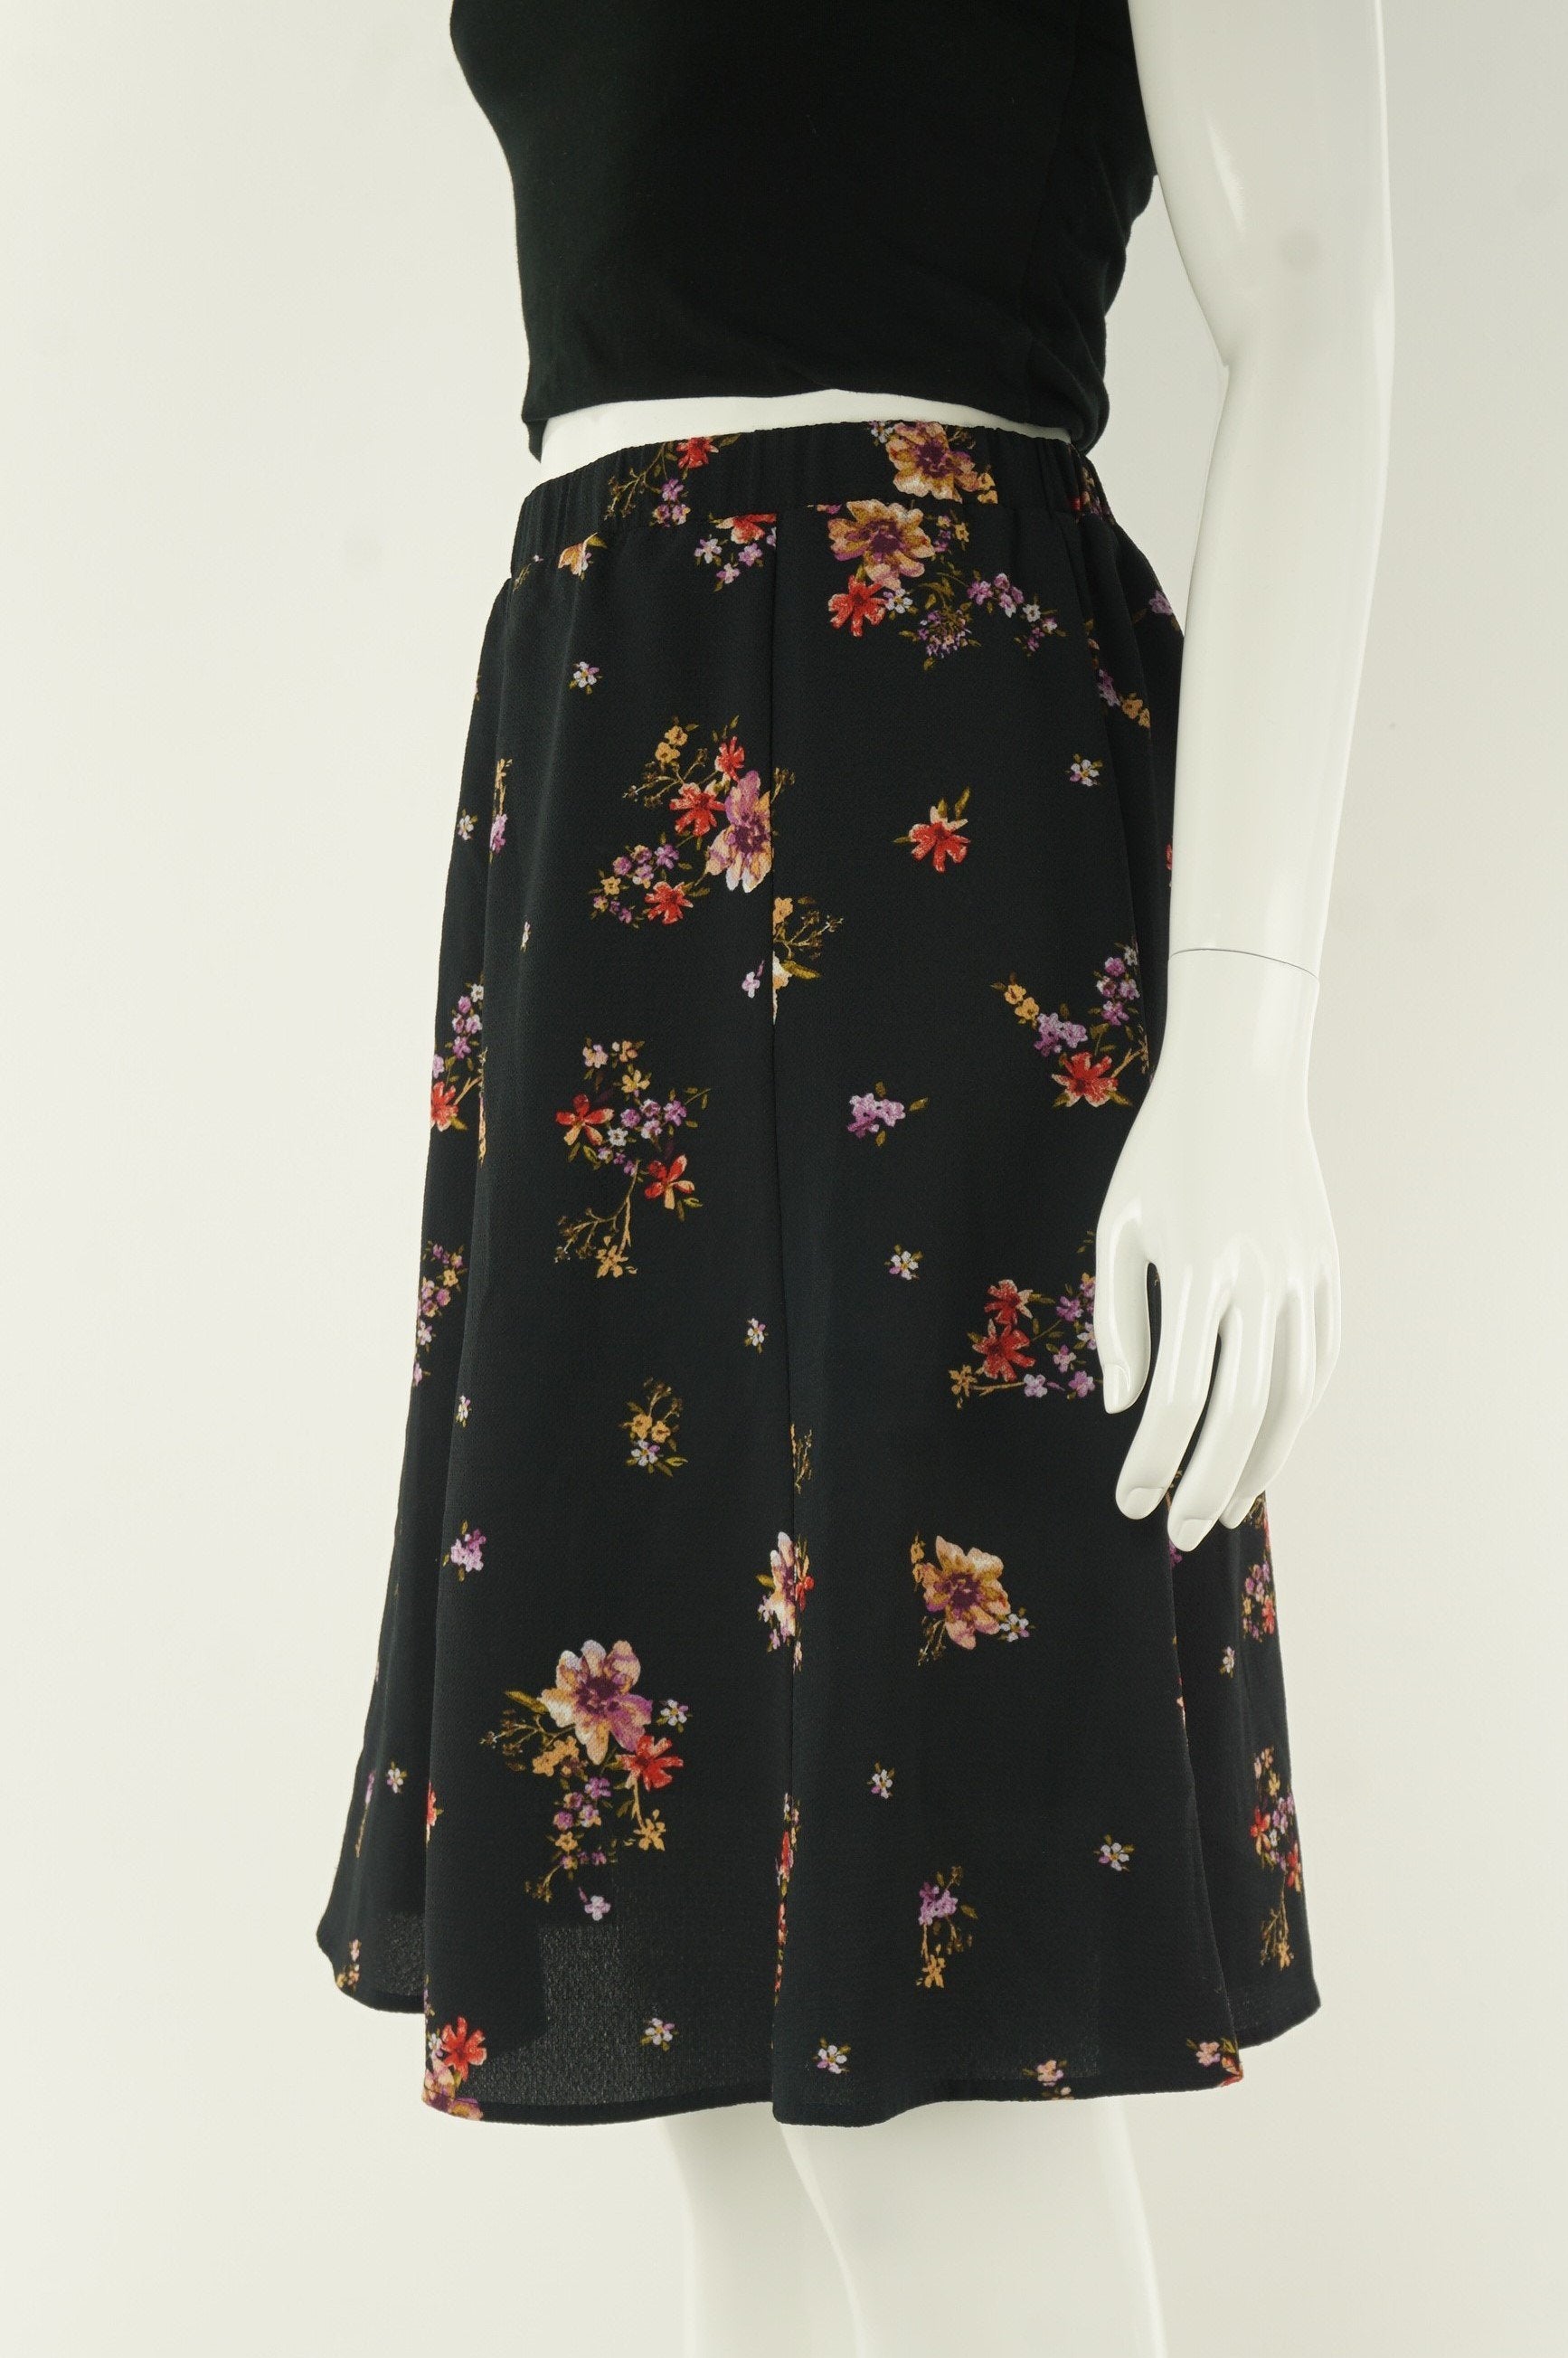 Bobeau Floral Print Midi Skirt, Light and cute midi skirt., Black, 97% polyester, 3% Spandex, women's Dresses & Skirts, women's Black Dresses & Skirts, Bobeau women's Dresses & Skirts, women's floral print skirt